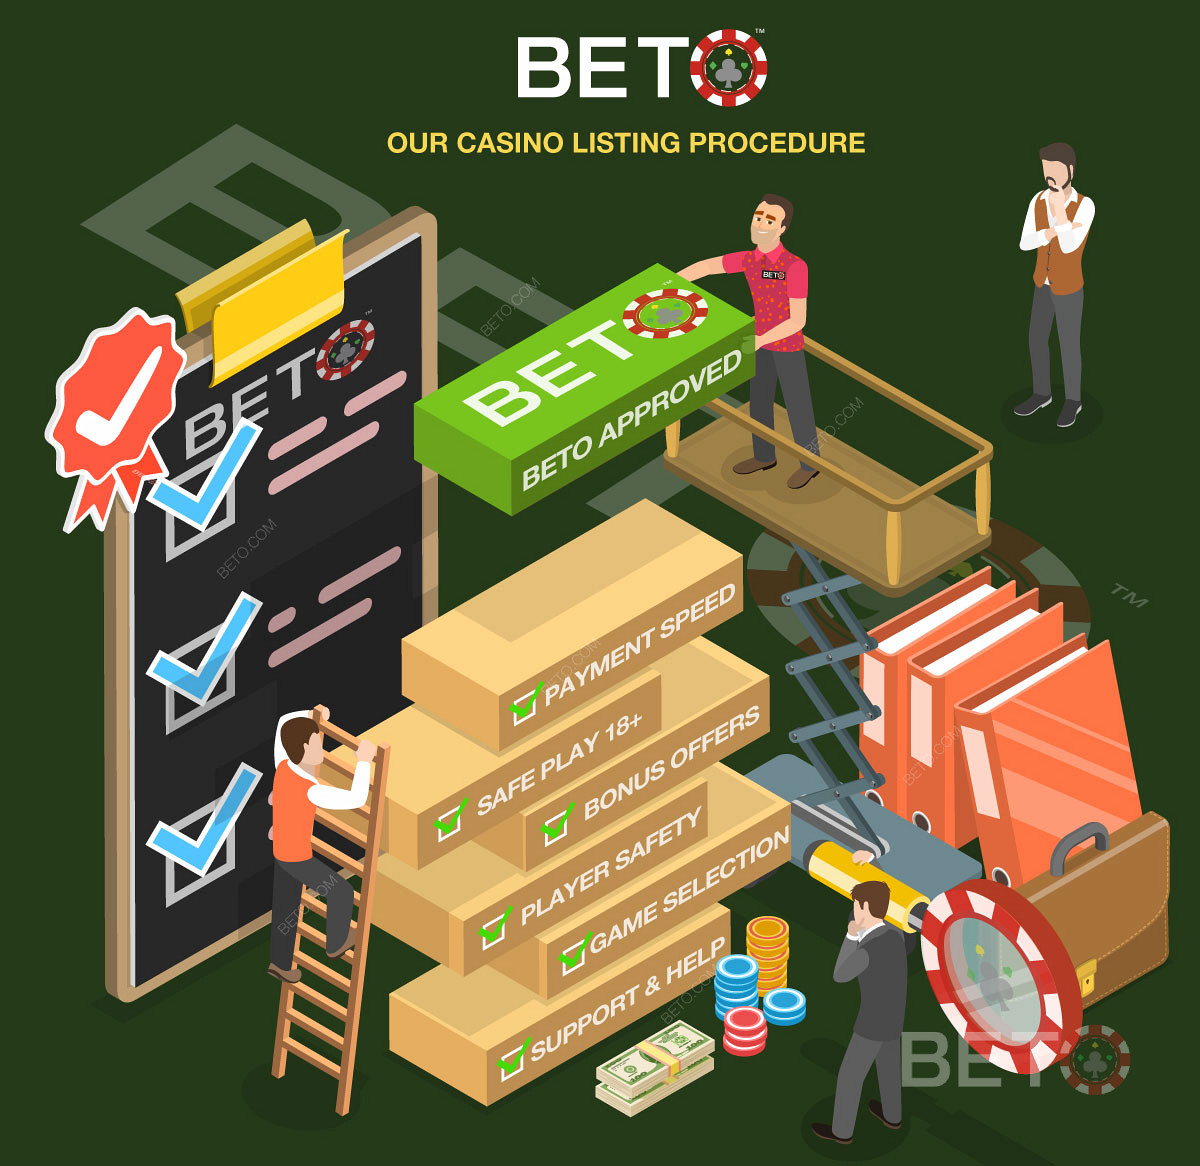 BETO.com 上的详细赌场审查流程